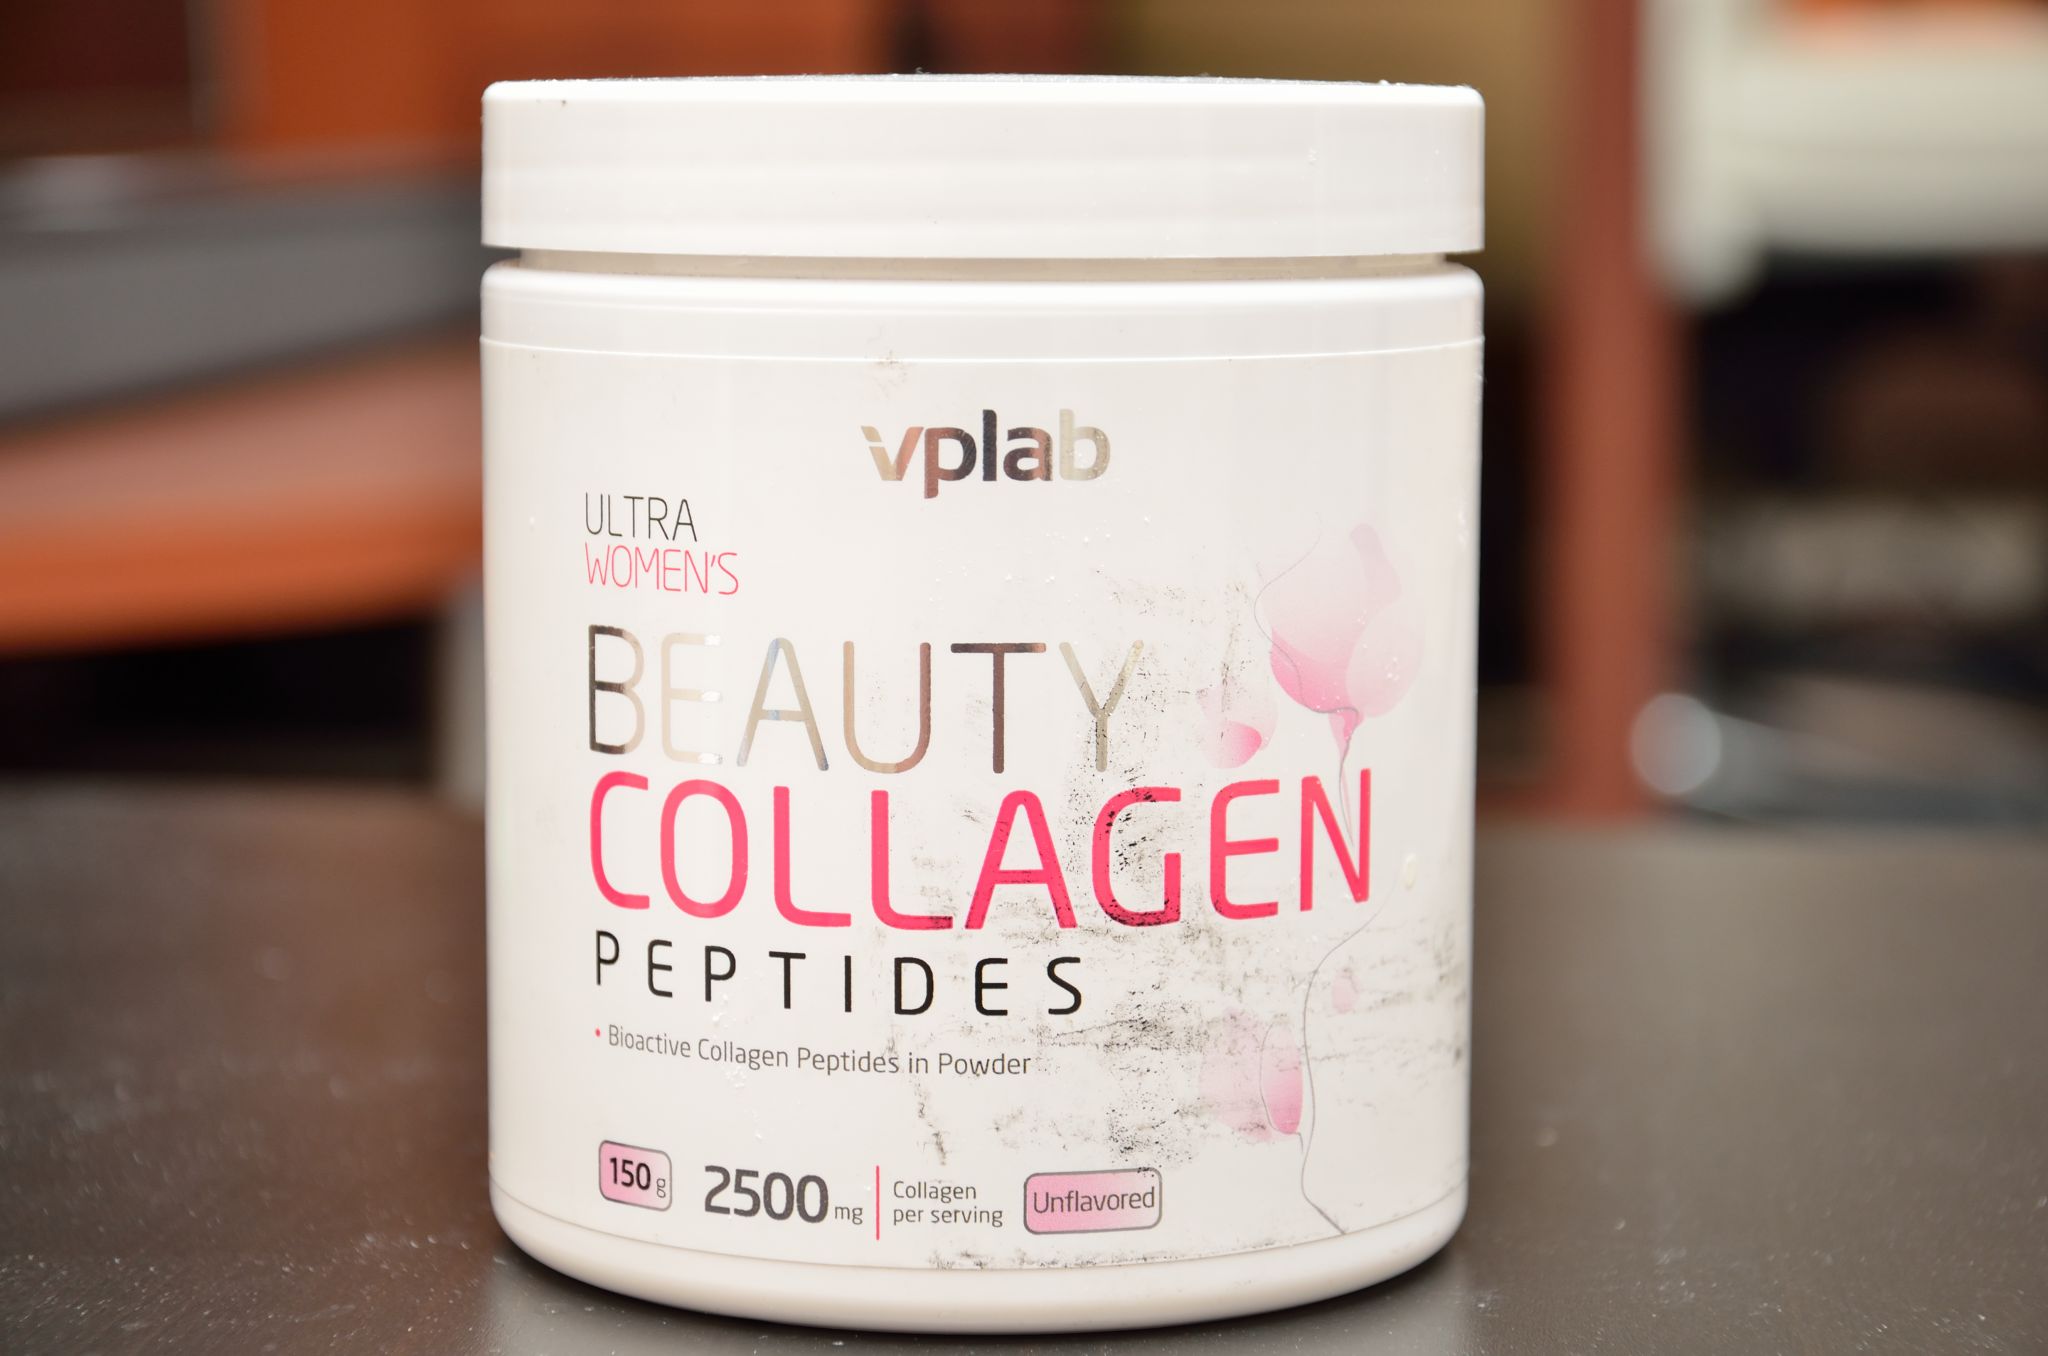 Лучший пептидный коллаген. ВПЛАБ Бьюти коллаген пептид 150г. Бьюти коллаген пептид VPLAB. Коллаген VPLAB / Beauty Collagen Peptides / 150 g. Коллаген VPLAB Collagen Peptides.